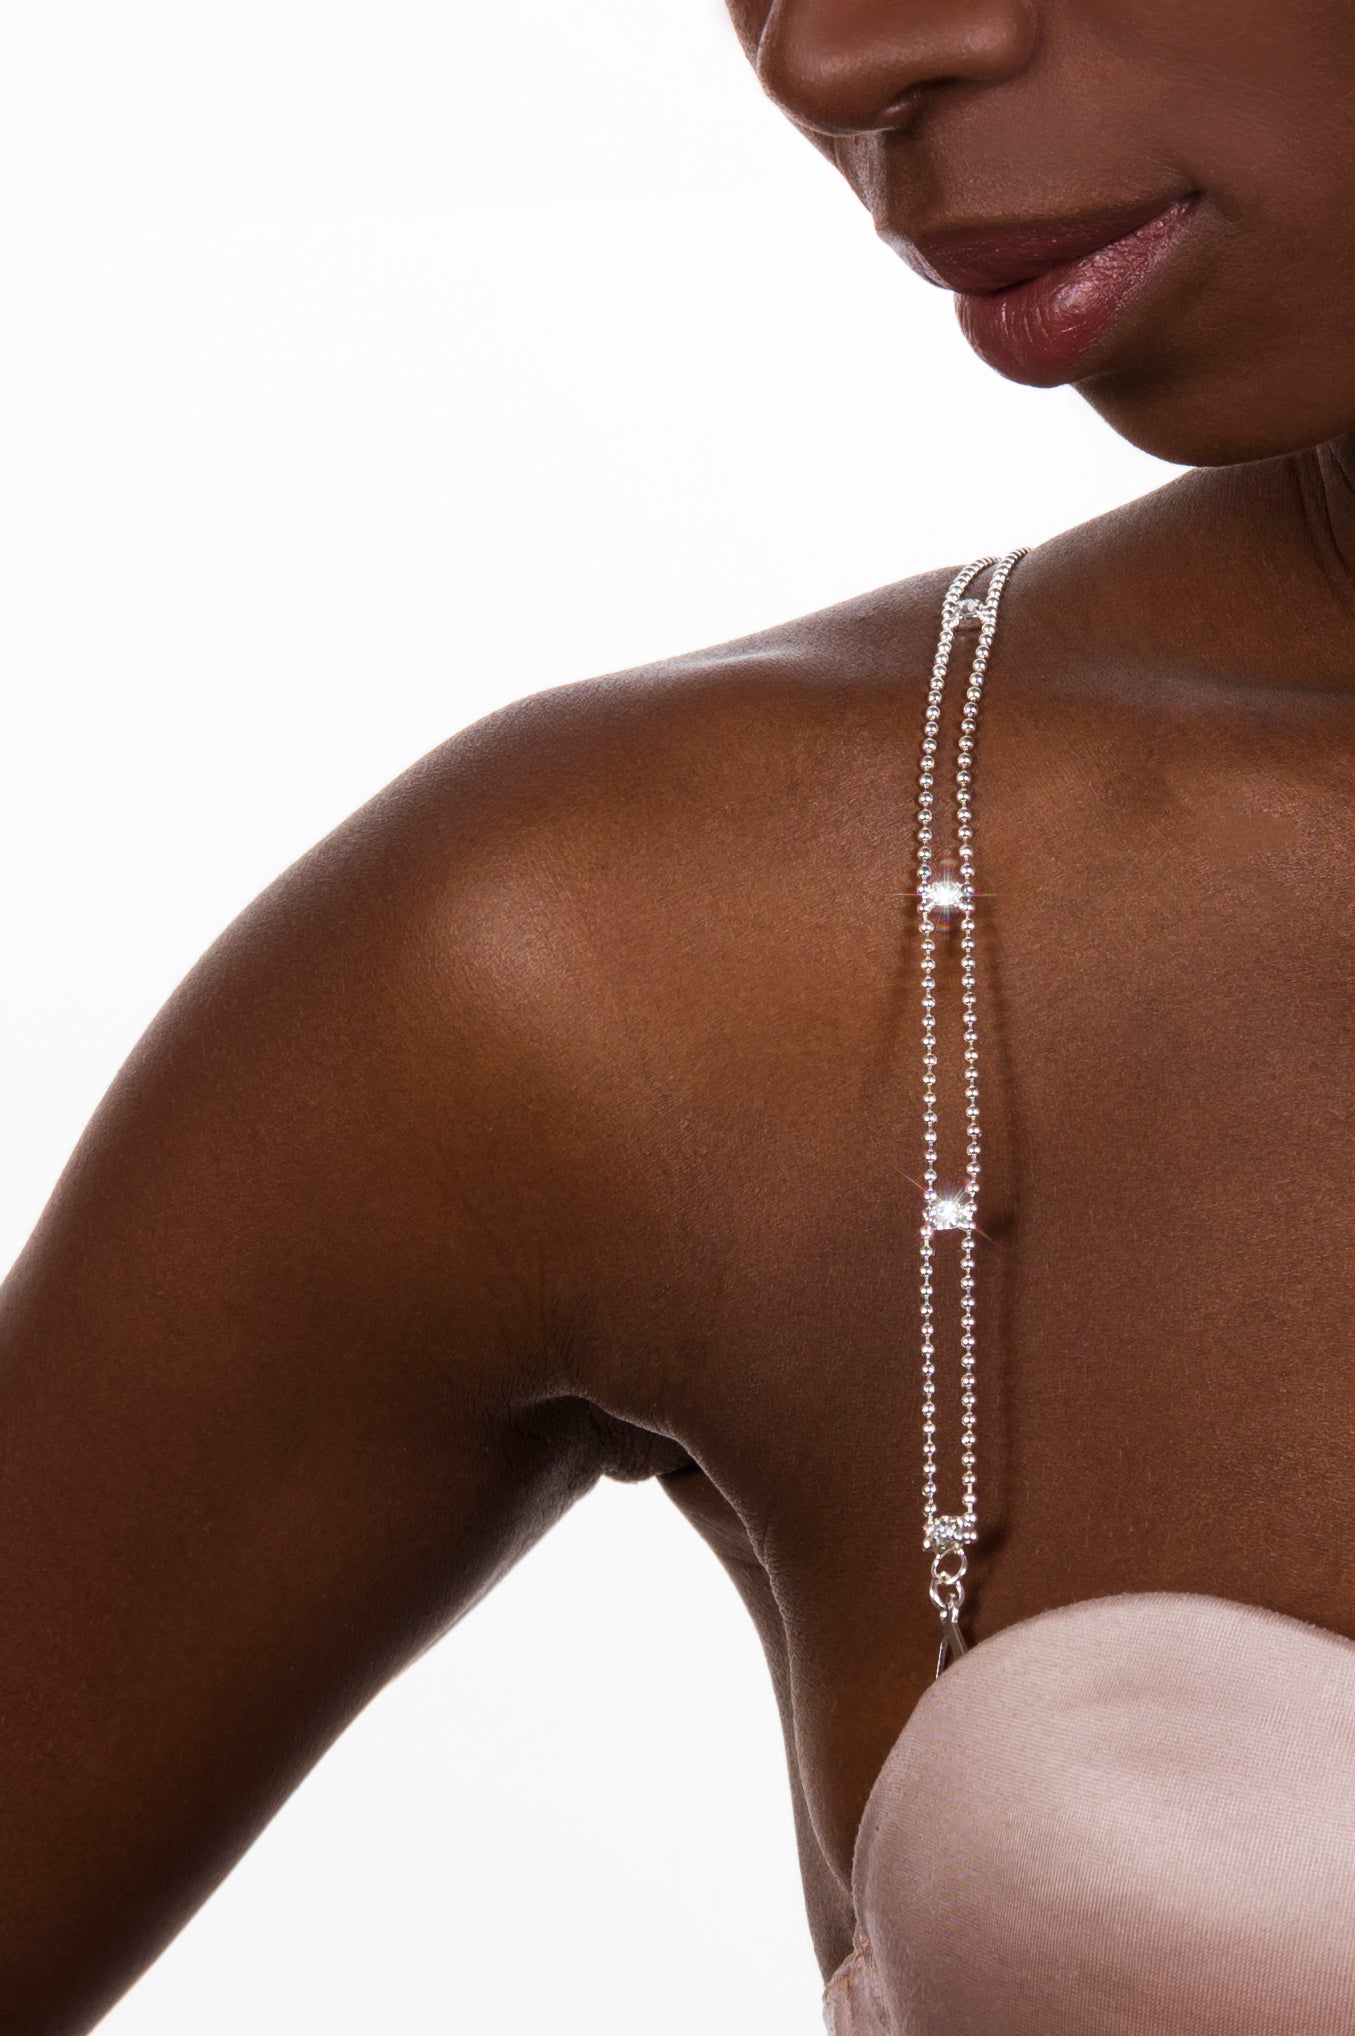 silver dainty bra straps on dark skin